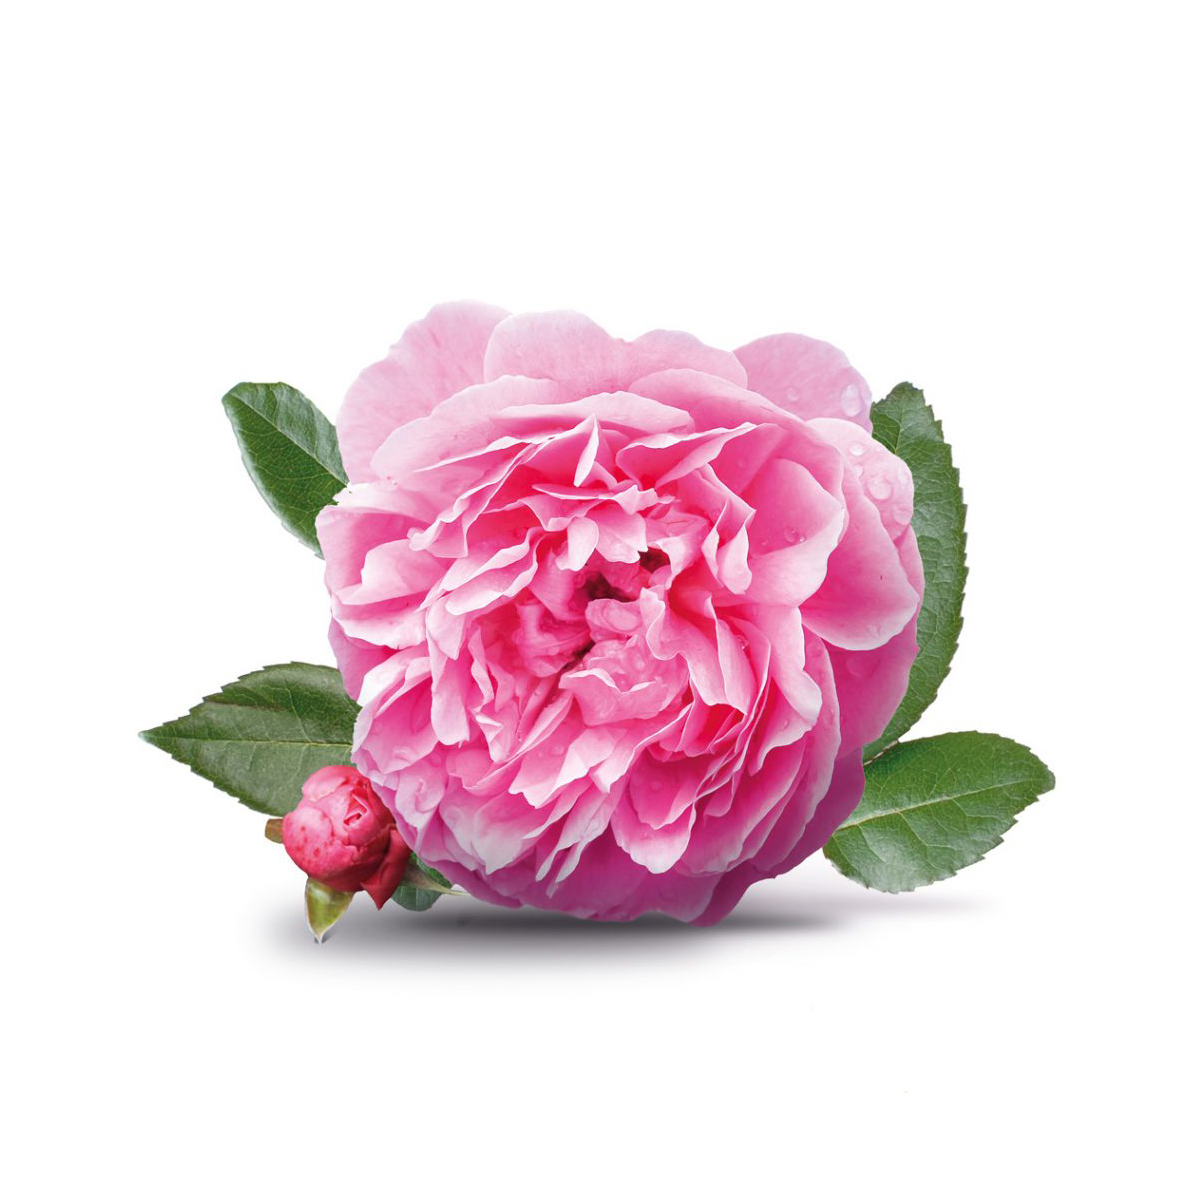  گل محمدی(Rosa damascene)